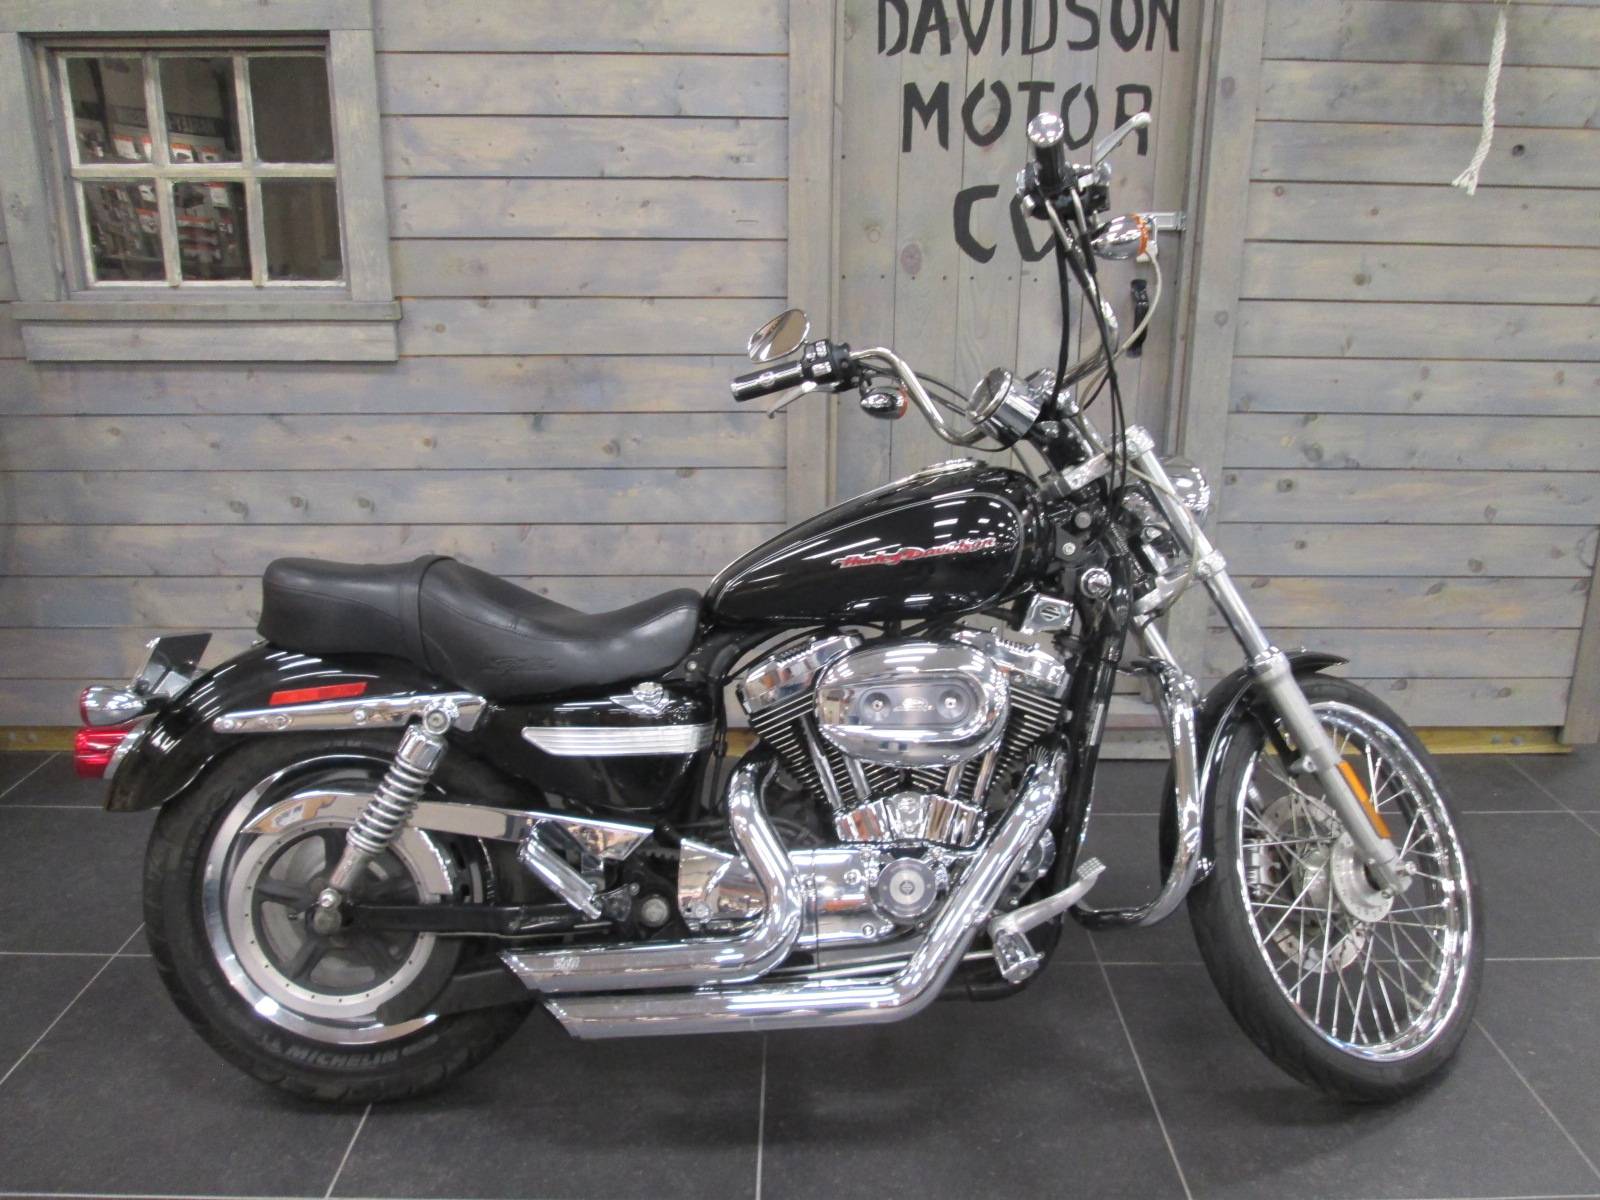 Used 2005 Harley Davidson Sportster Xl 1200 Custom Motorcycles In Lafayette In 454396 Vivid Black